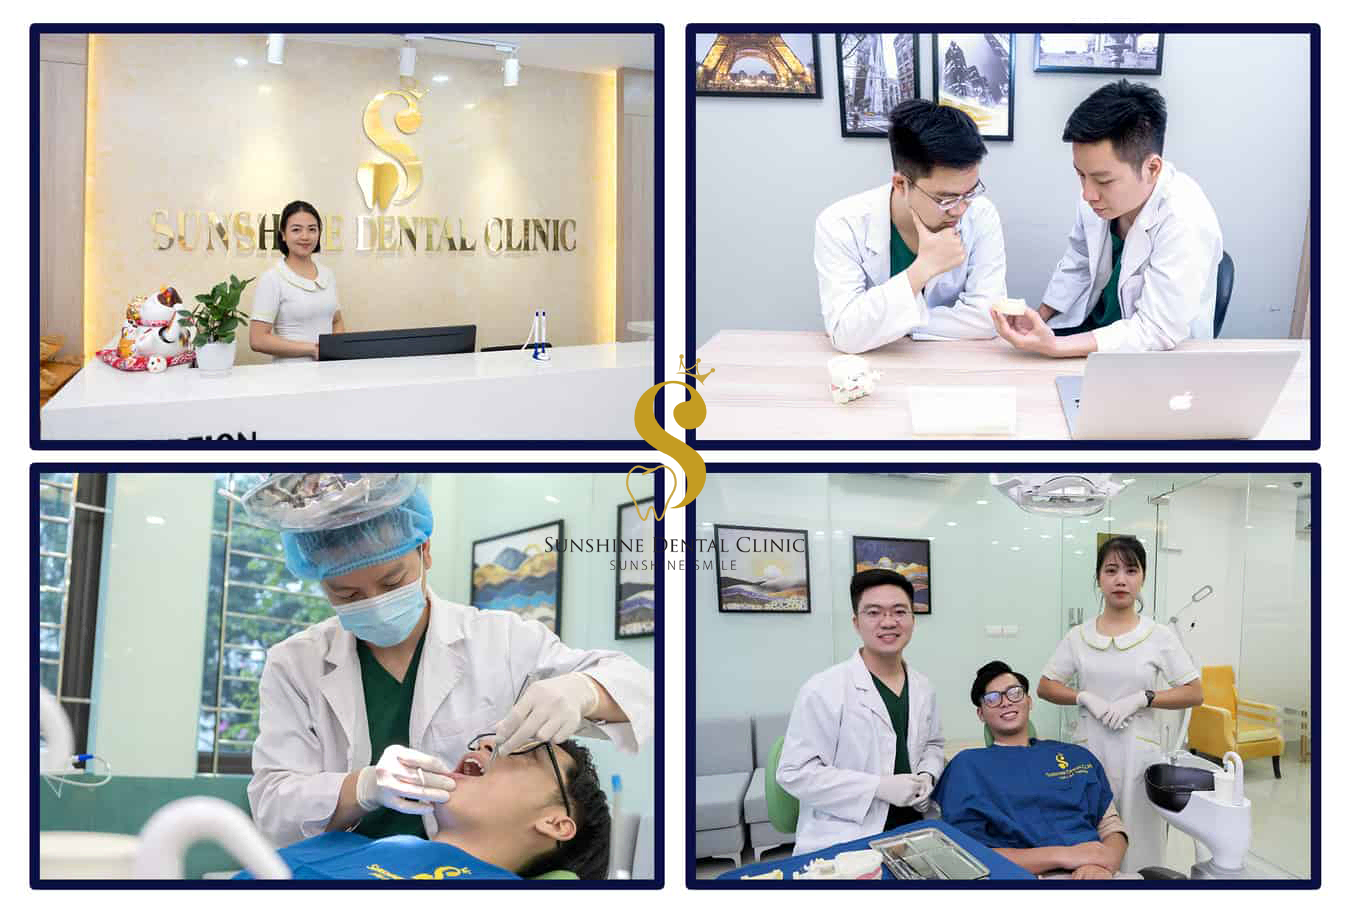 Sunshine-Dental-Clinic-Dia-chi-nha-khoa-hoi-tu-doi-ngu-Y-Bac-si-gioi-ban-co-the-lua-chon-khi-nieng